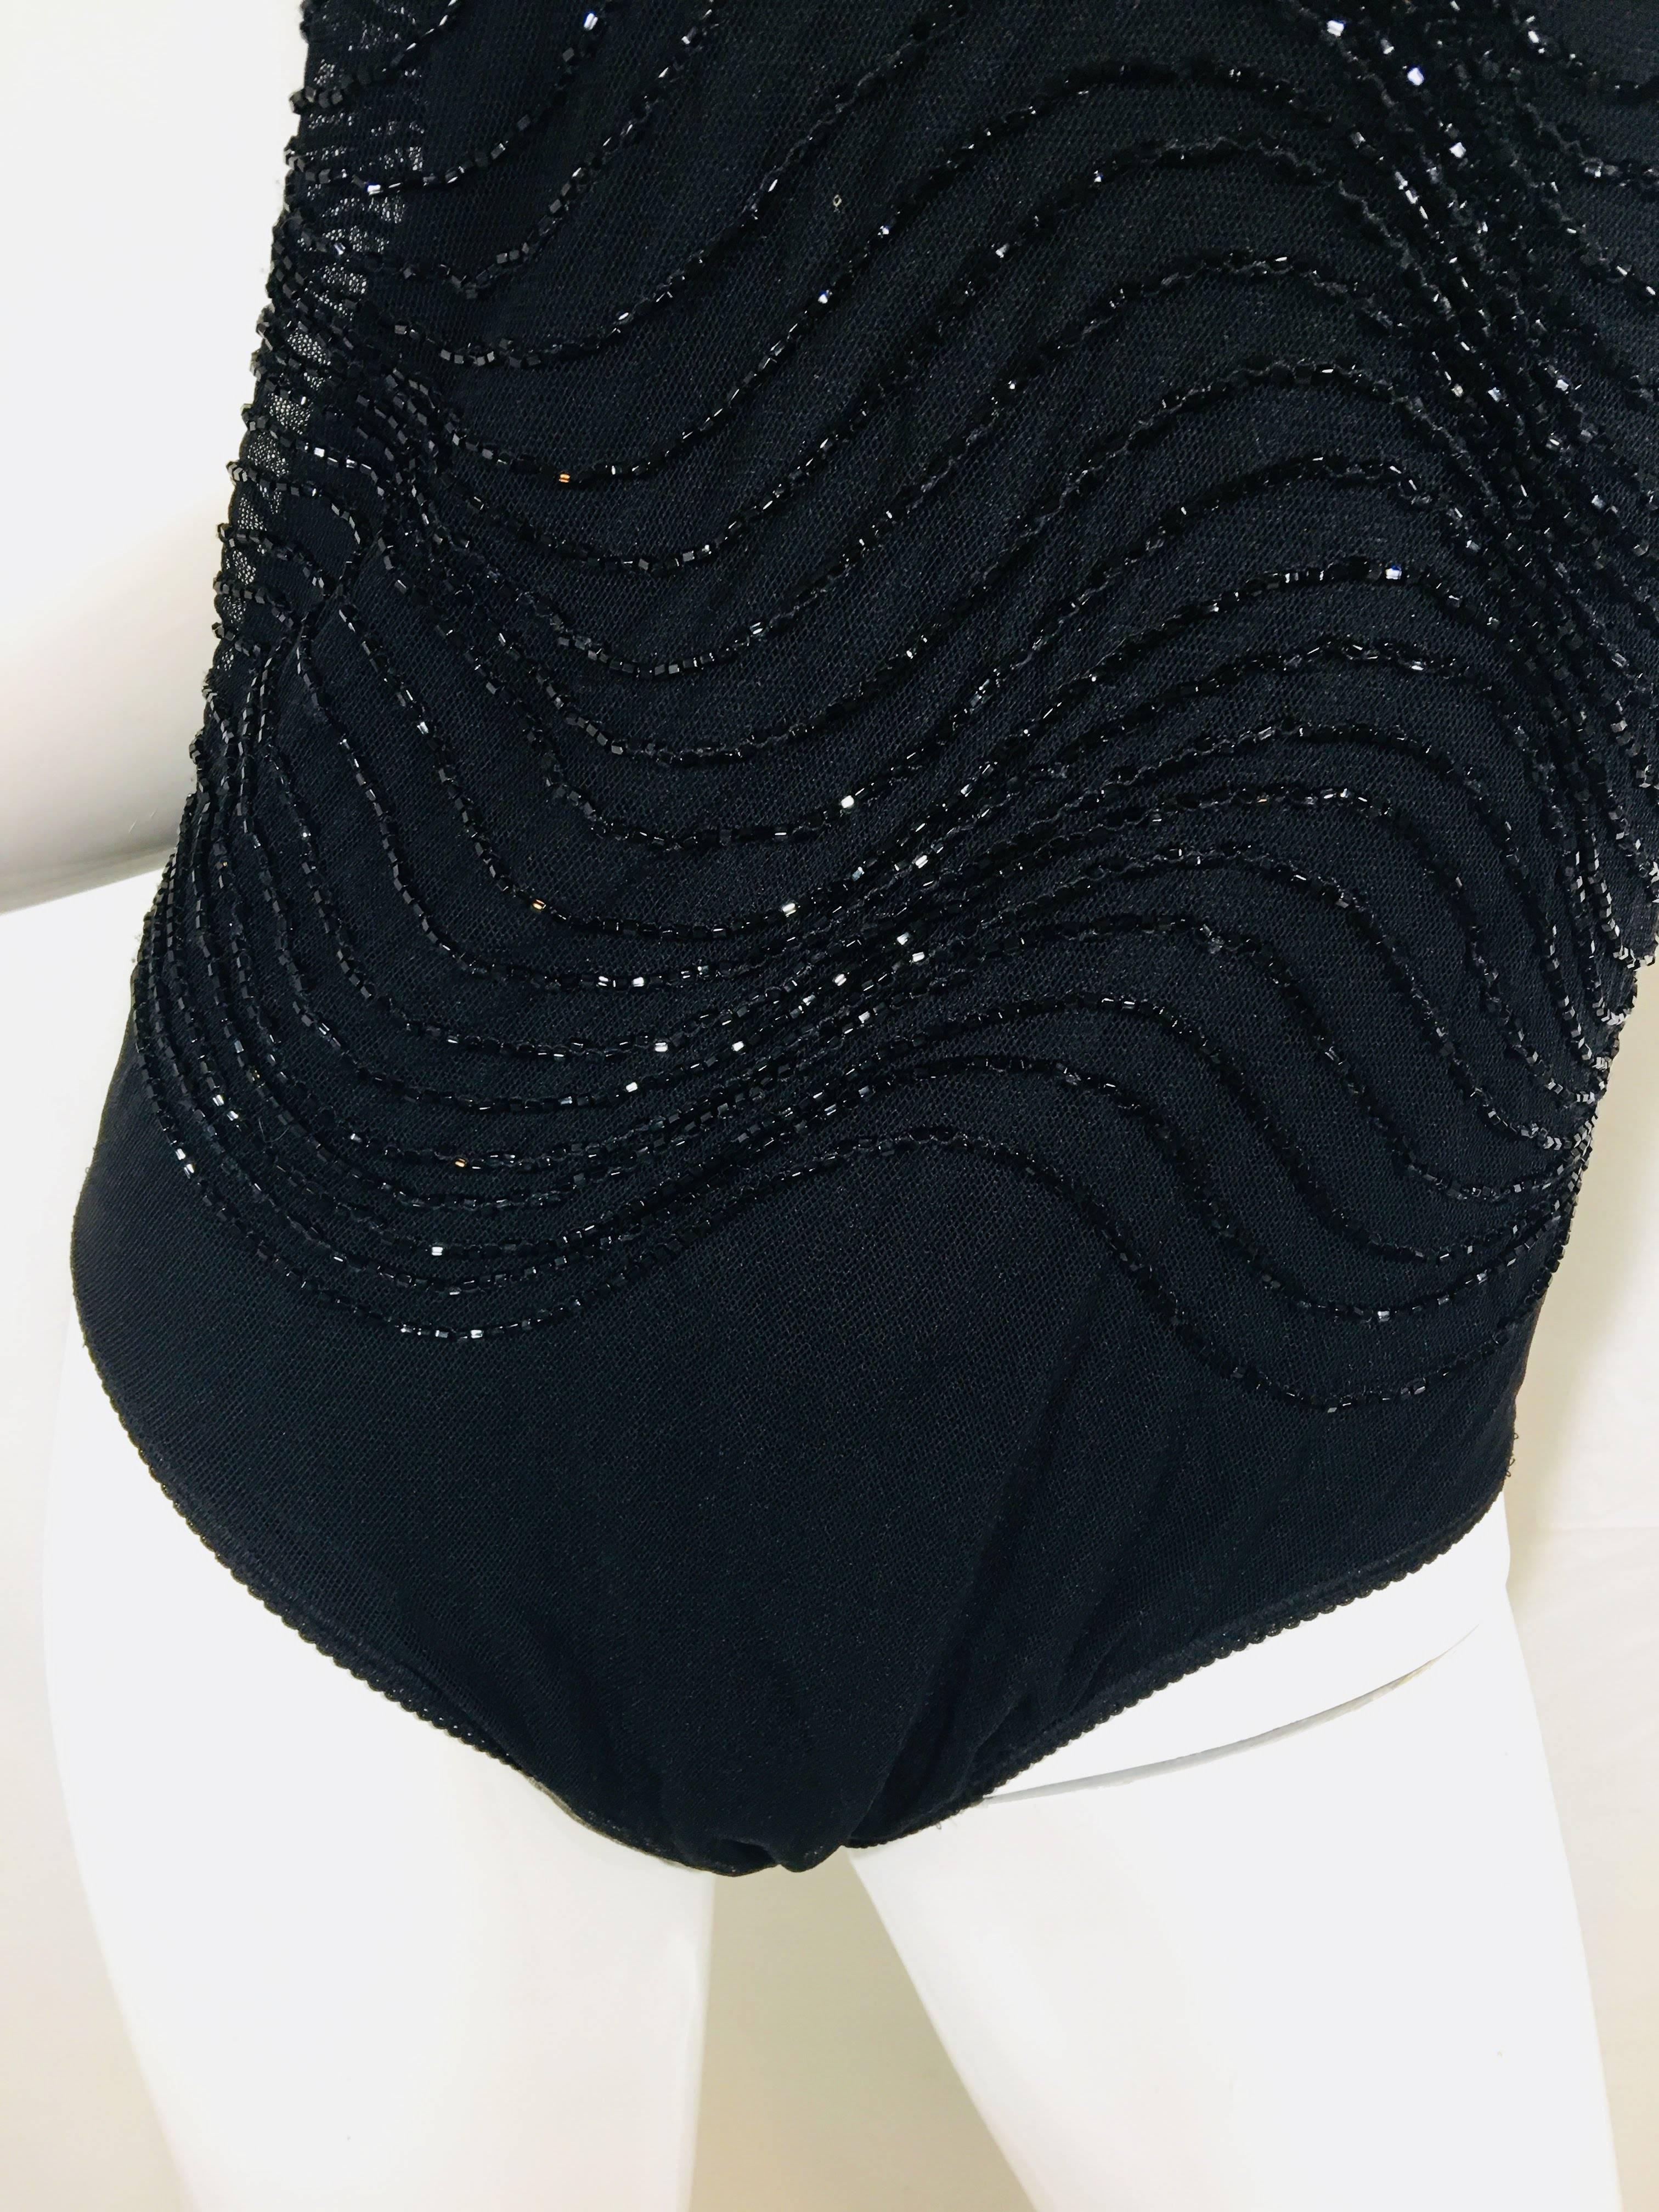 Ritmo di Perla Sleeveless Embellished Bodysuit with Spaghetti Straps.